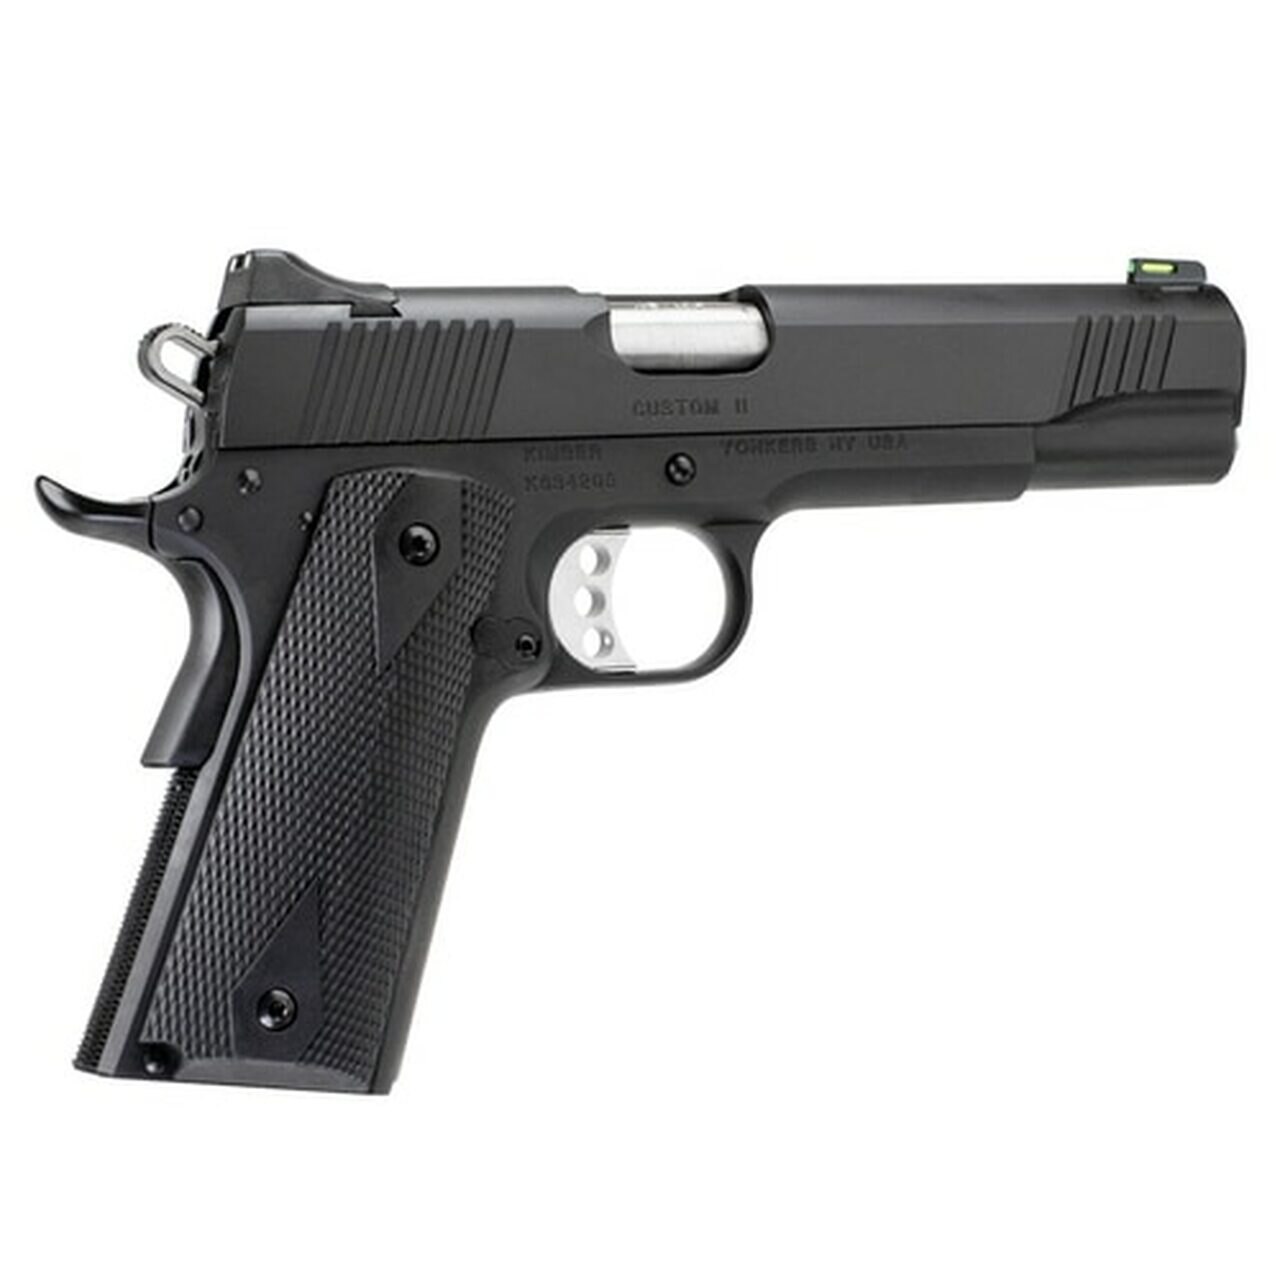 Image of Kimber Custom II GFO 45 ACP, 5", SHOT Show Package, 8rd, Black